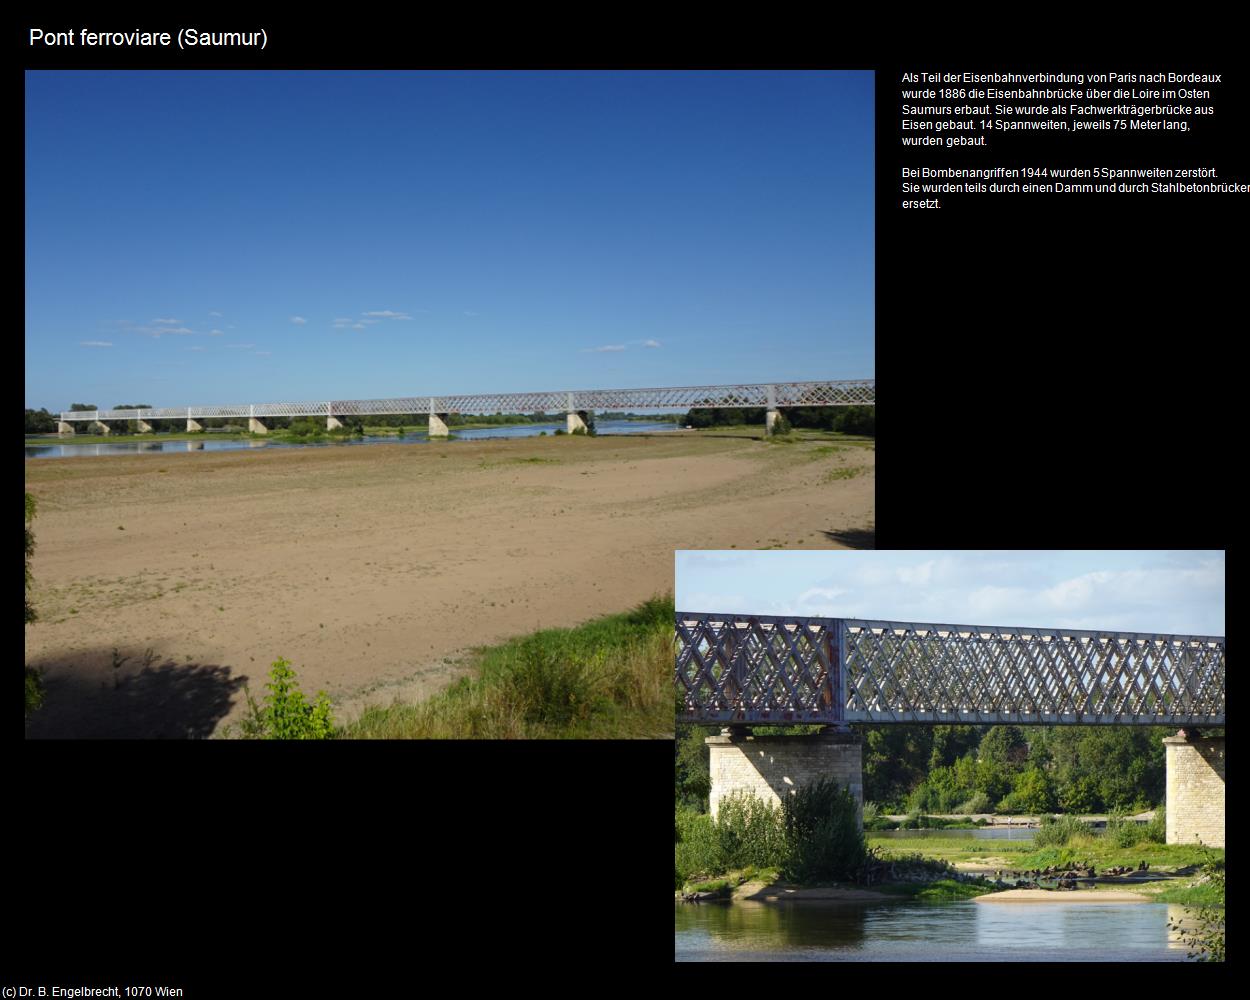 Pont ferroviare (Saumur (FR-PDL)) in Kulturatlas-FRANKREICH